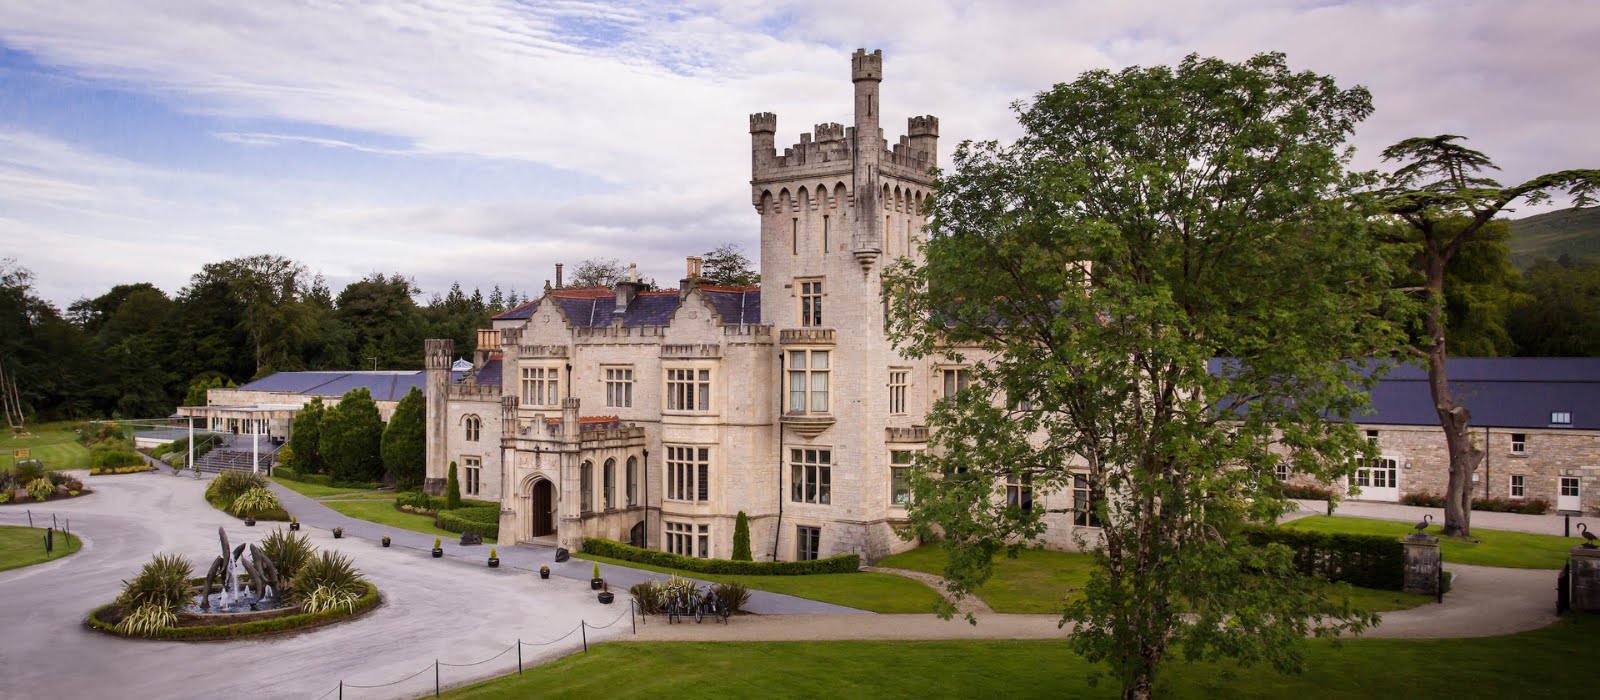 Lough Eske Castle: Five-star luxury meets laid-back leisure at this Donegal retreat